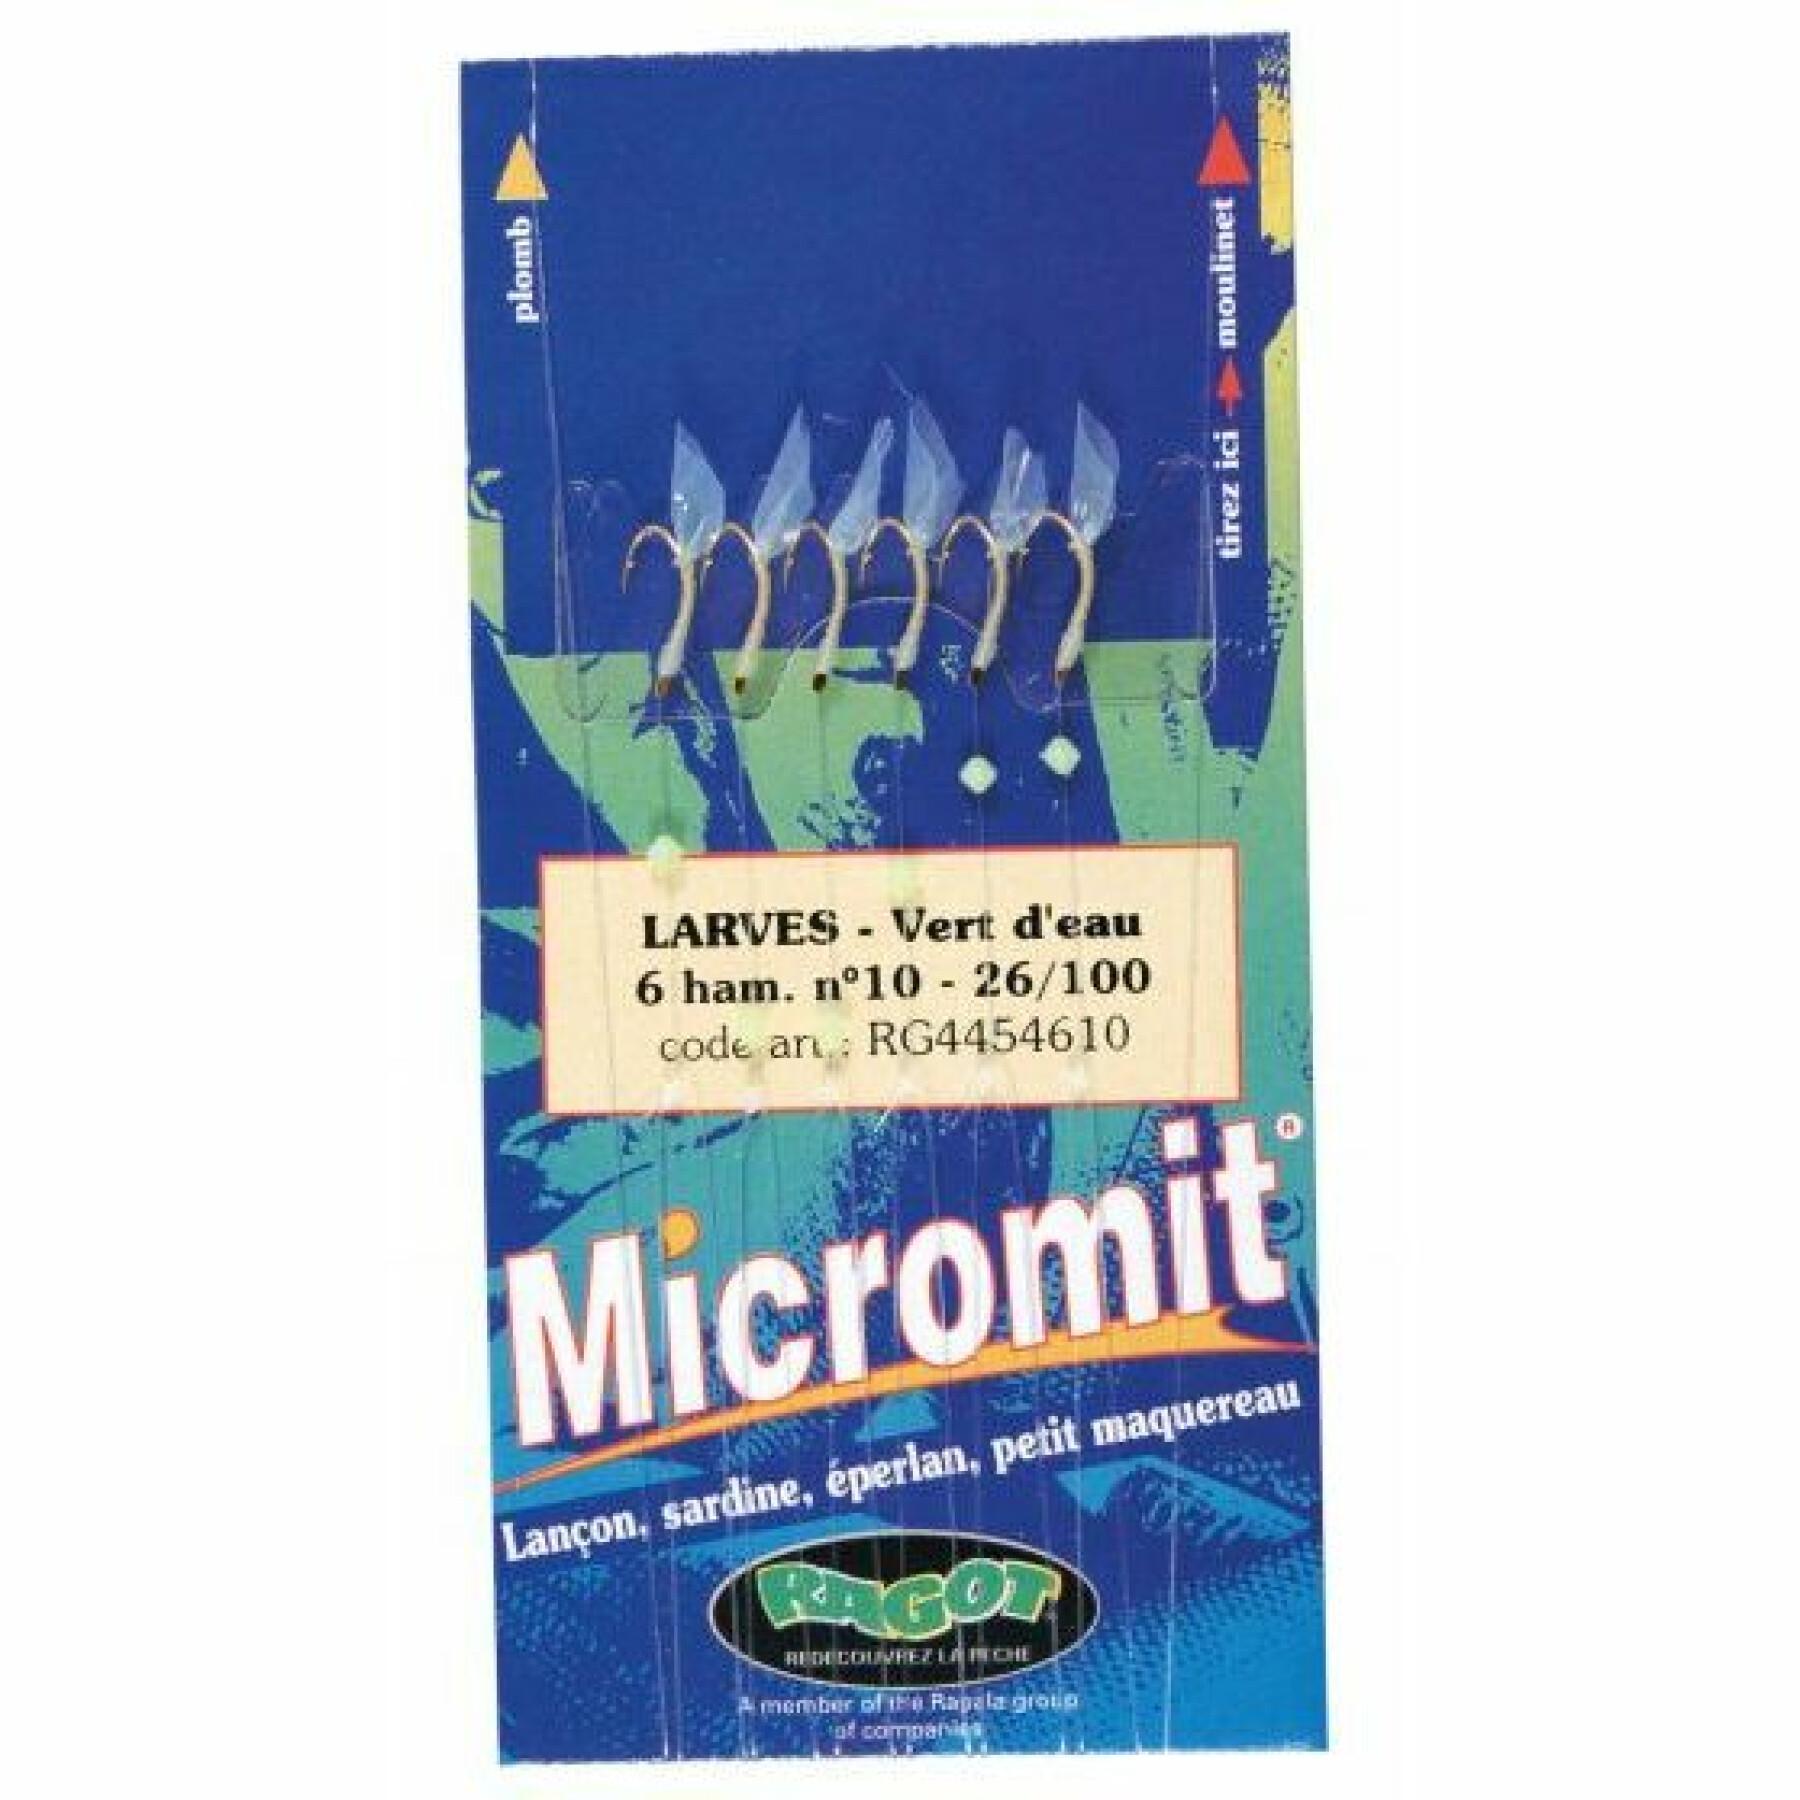 Pacote de 6 iscas de larvas Ragot micromit